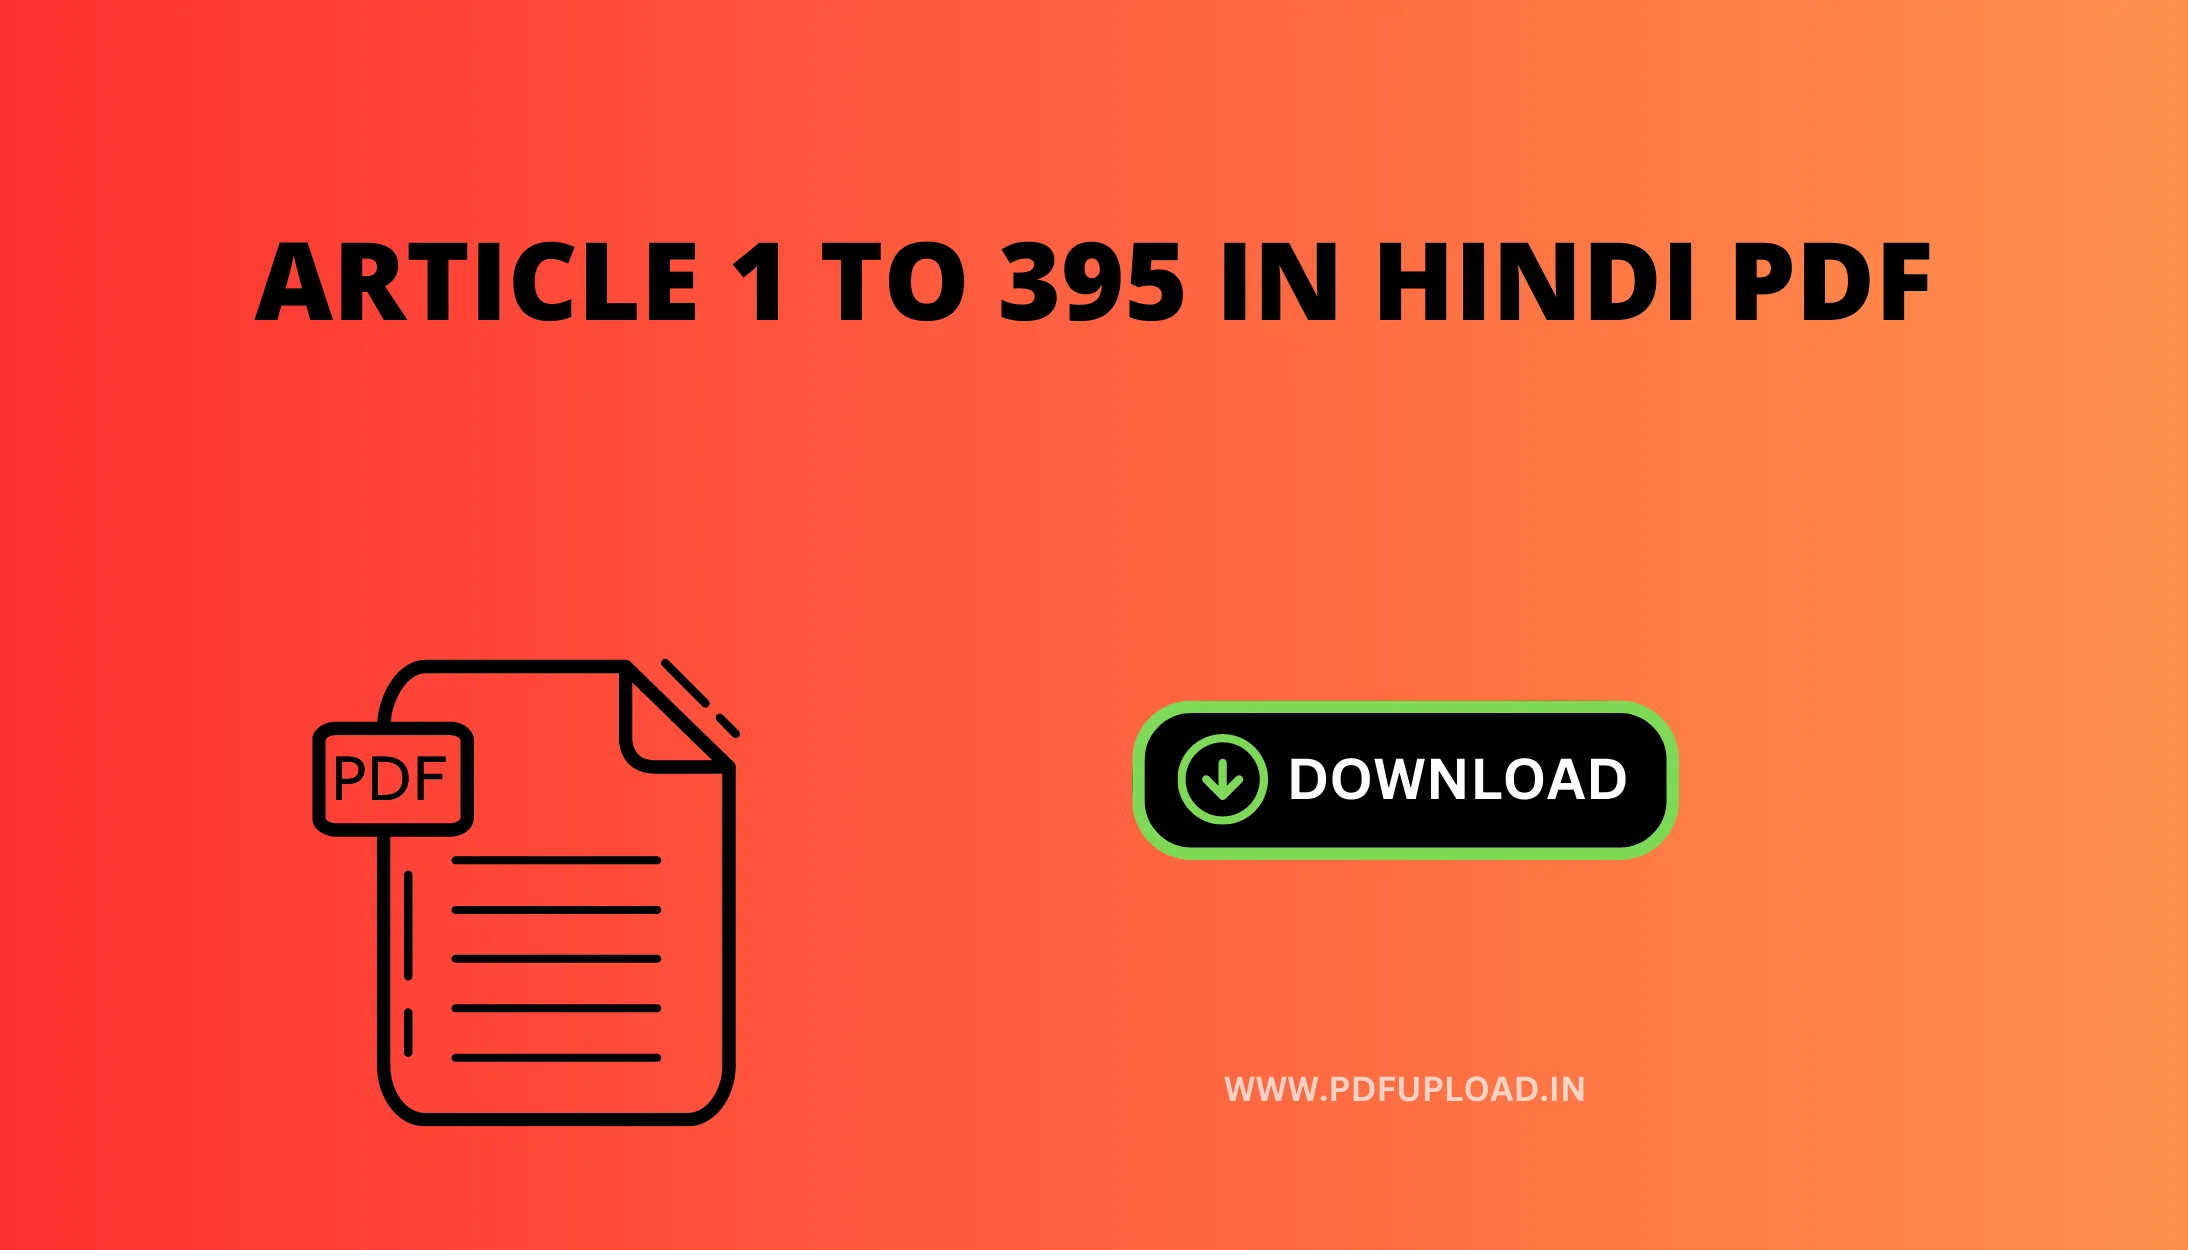 Article 1 to 395 in Hindi PDF